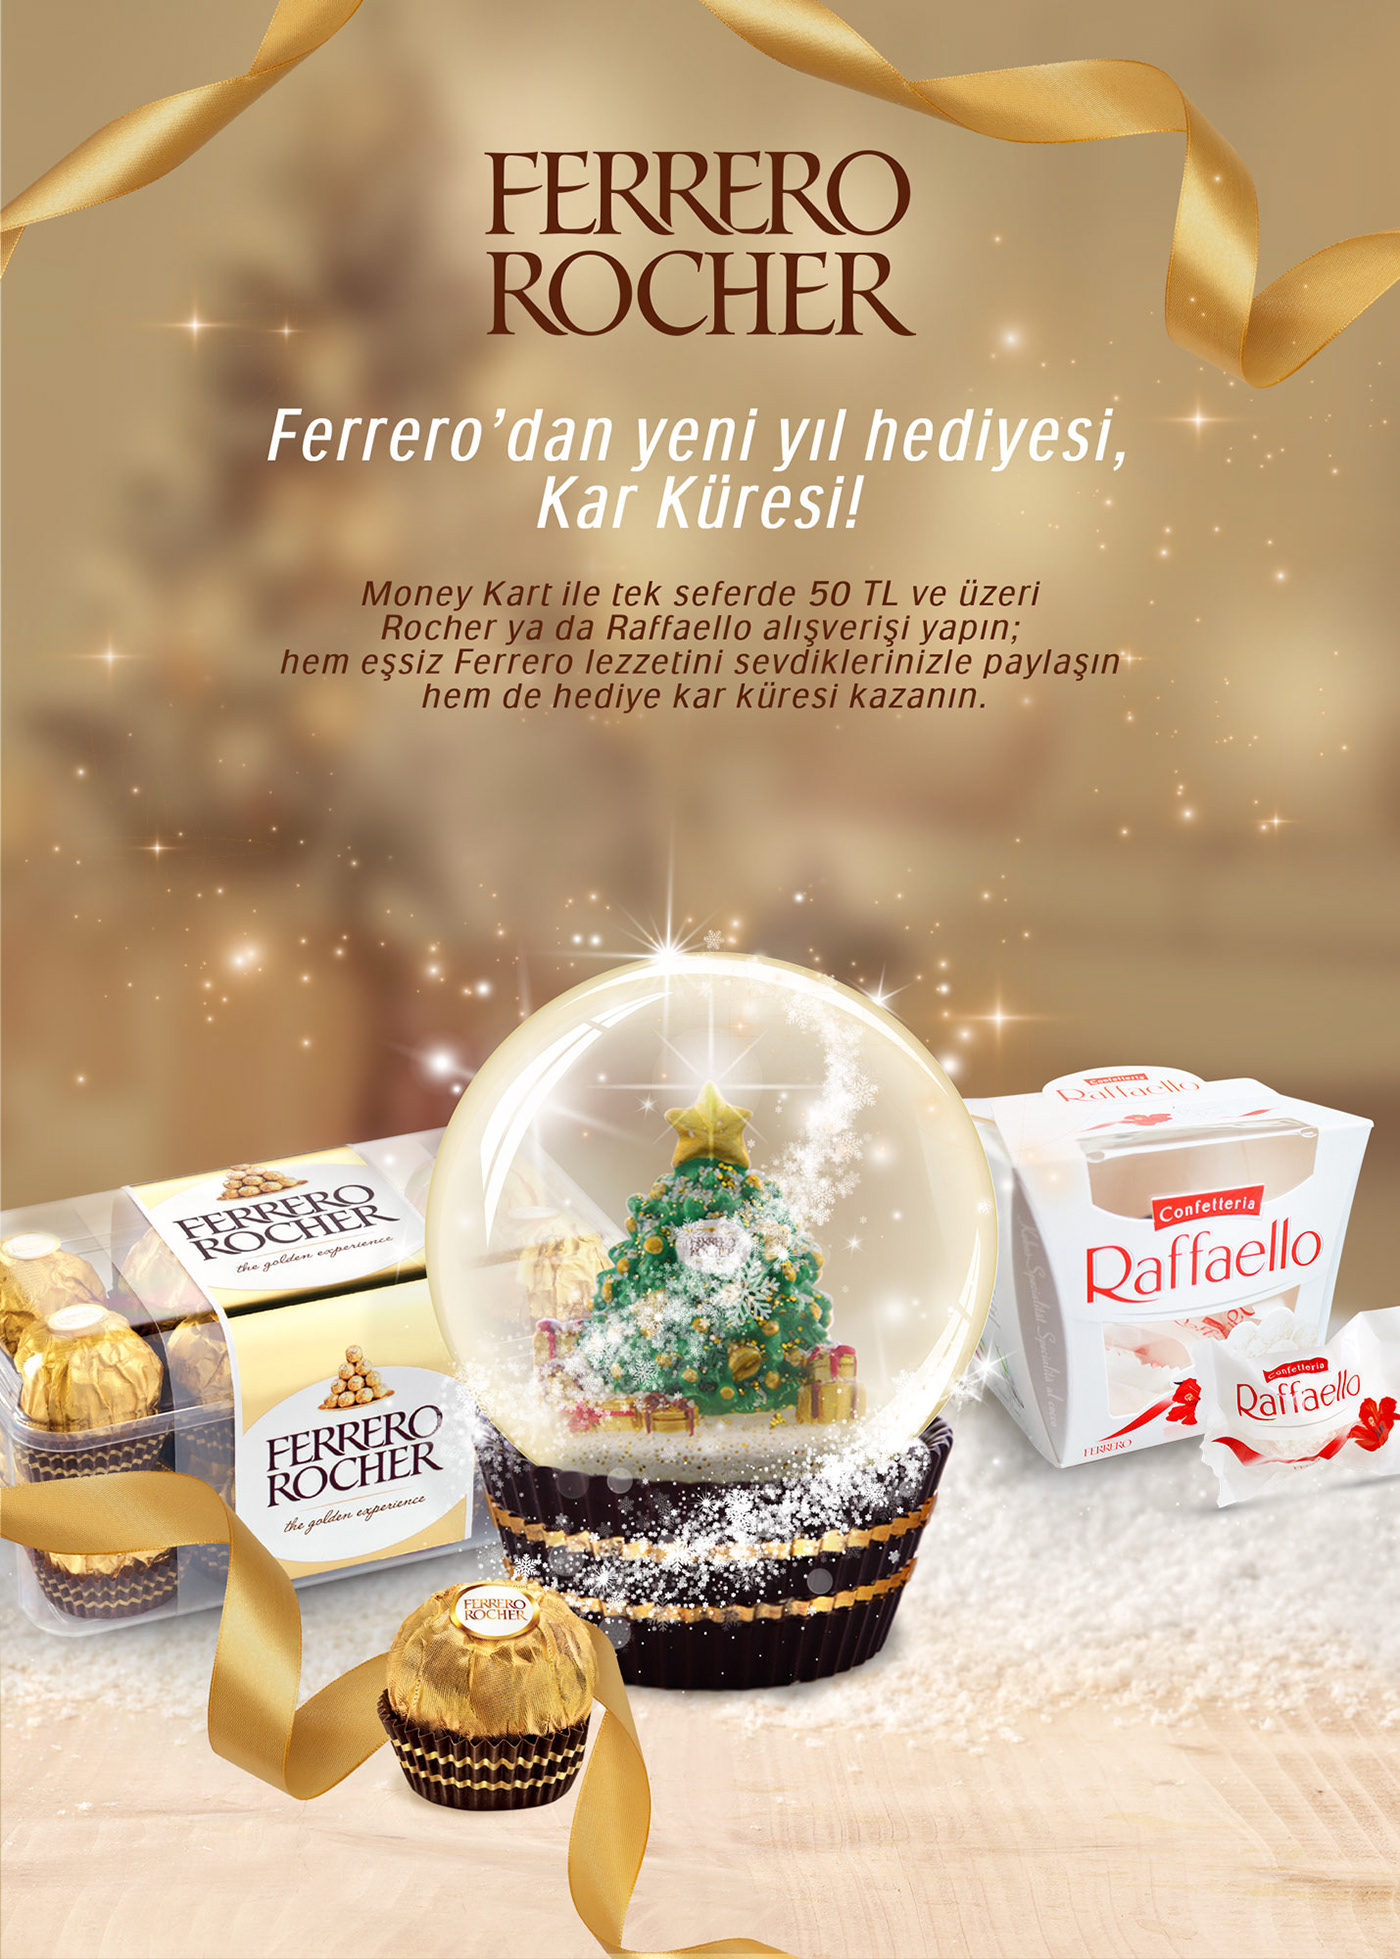 Promotion ferrero ferrero rocher rafaello new years Christmas instore chocolate Gift With Purchase